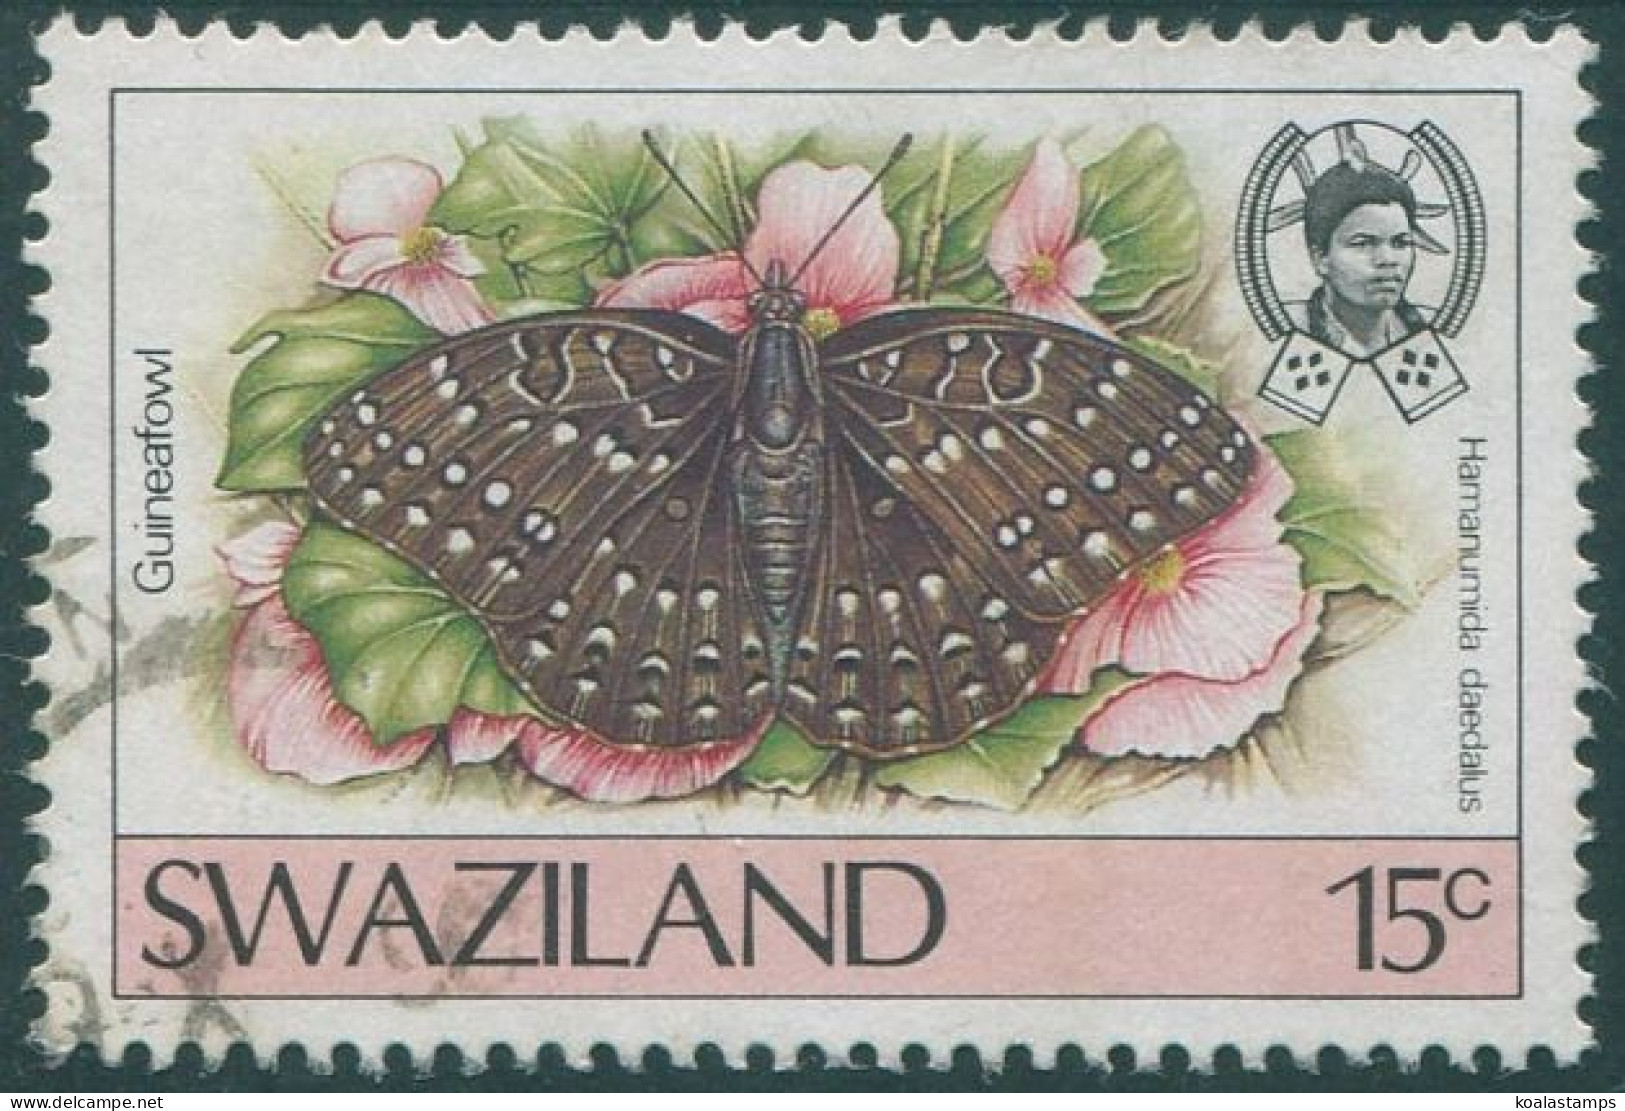 Swaziland 1987 SG517 15c Butterfly FU - Swaziland (1968-...)